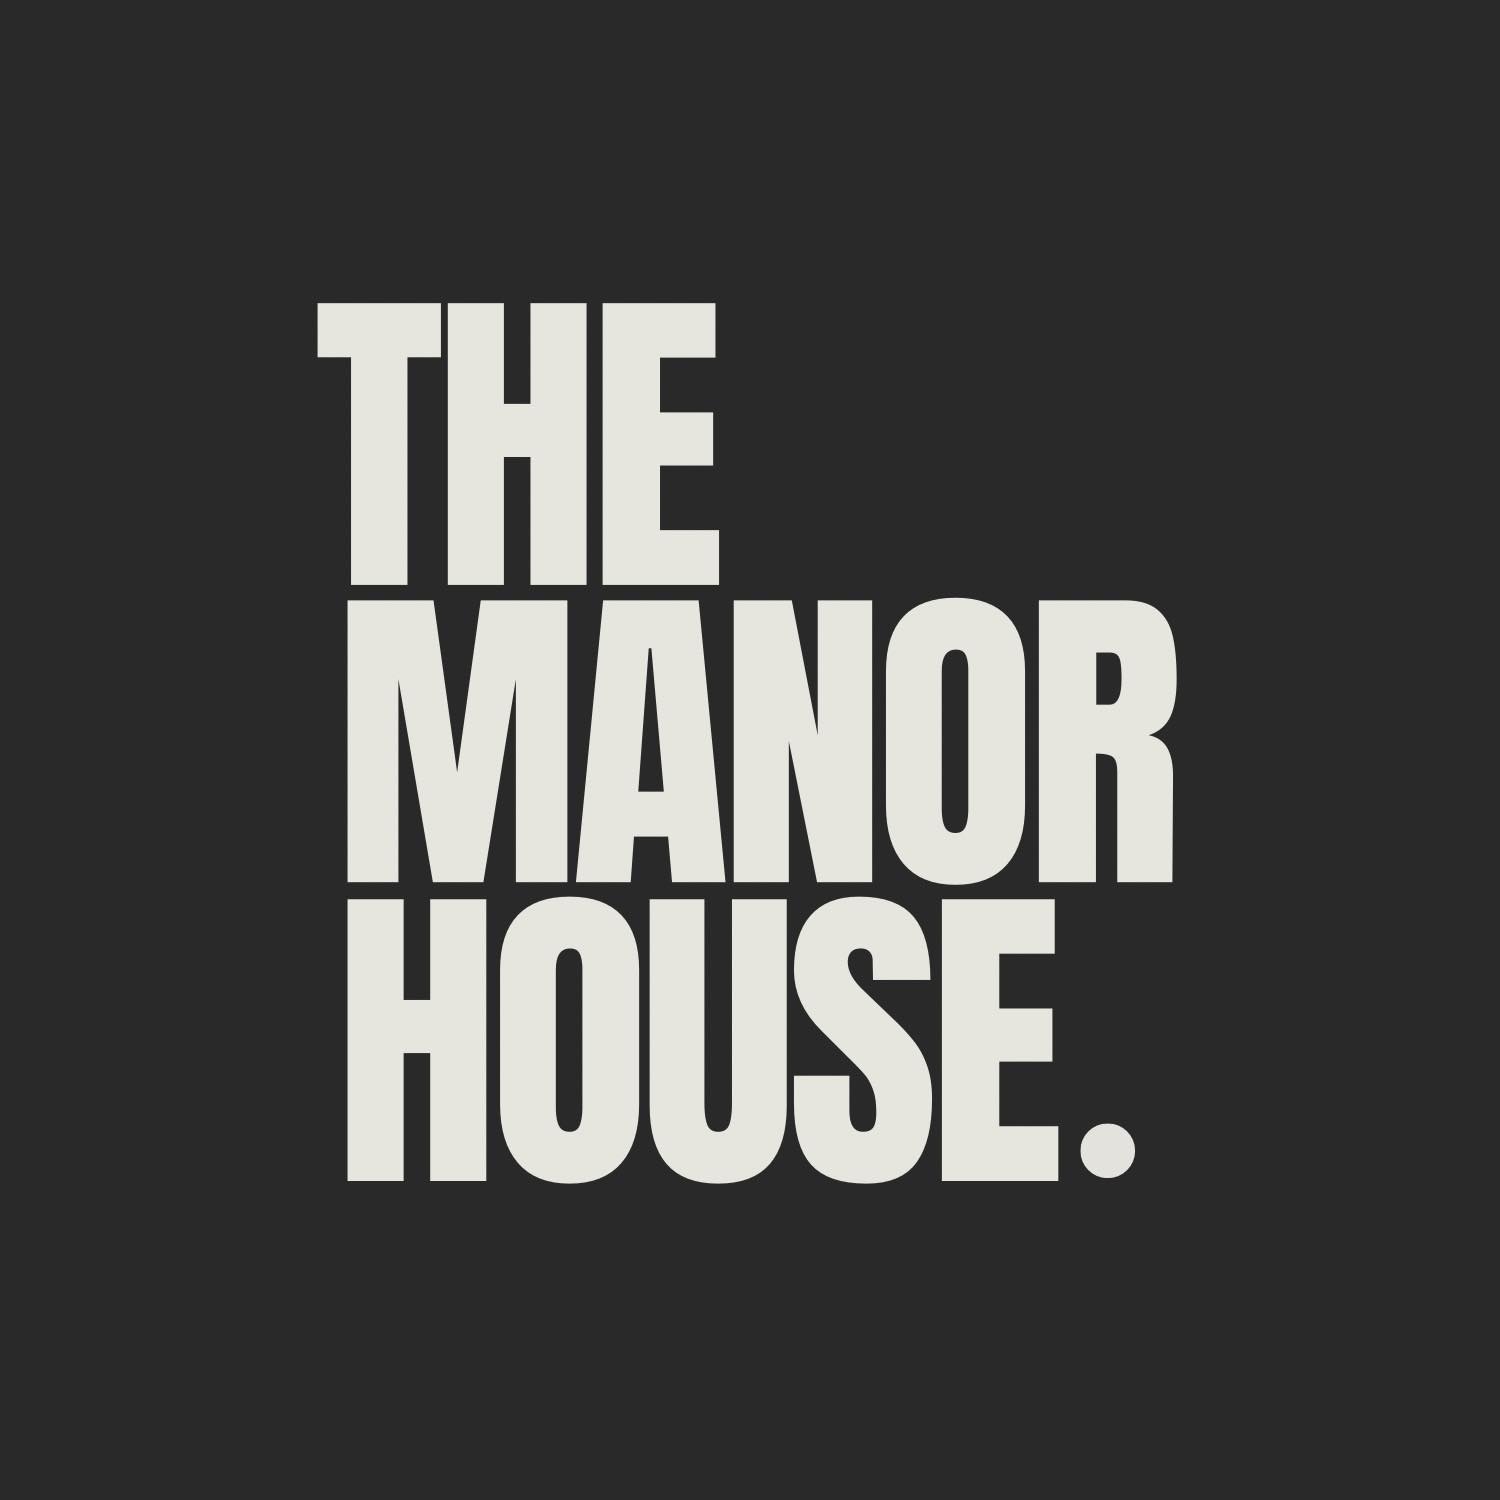 THE MANOR HOUSE logo